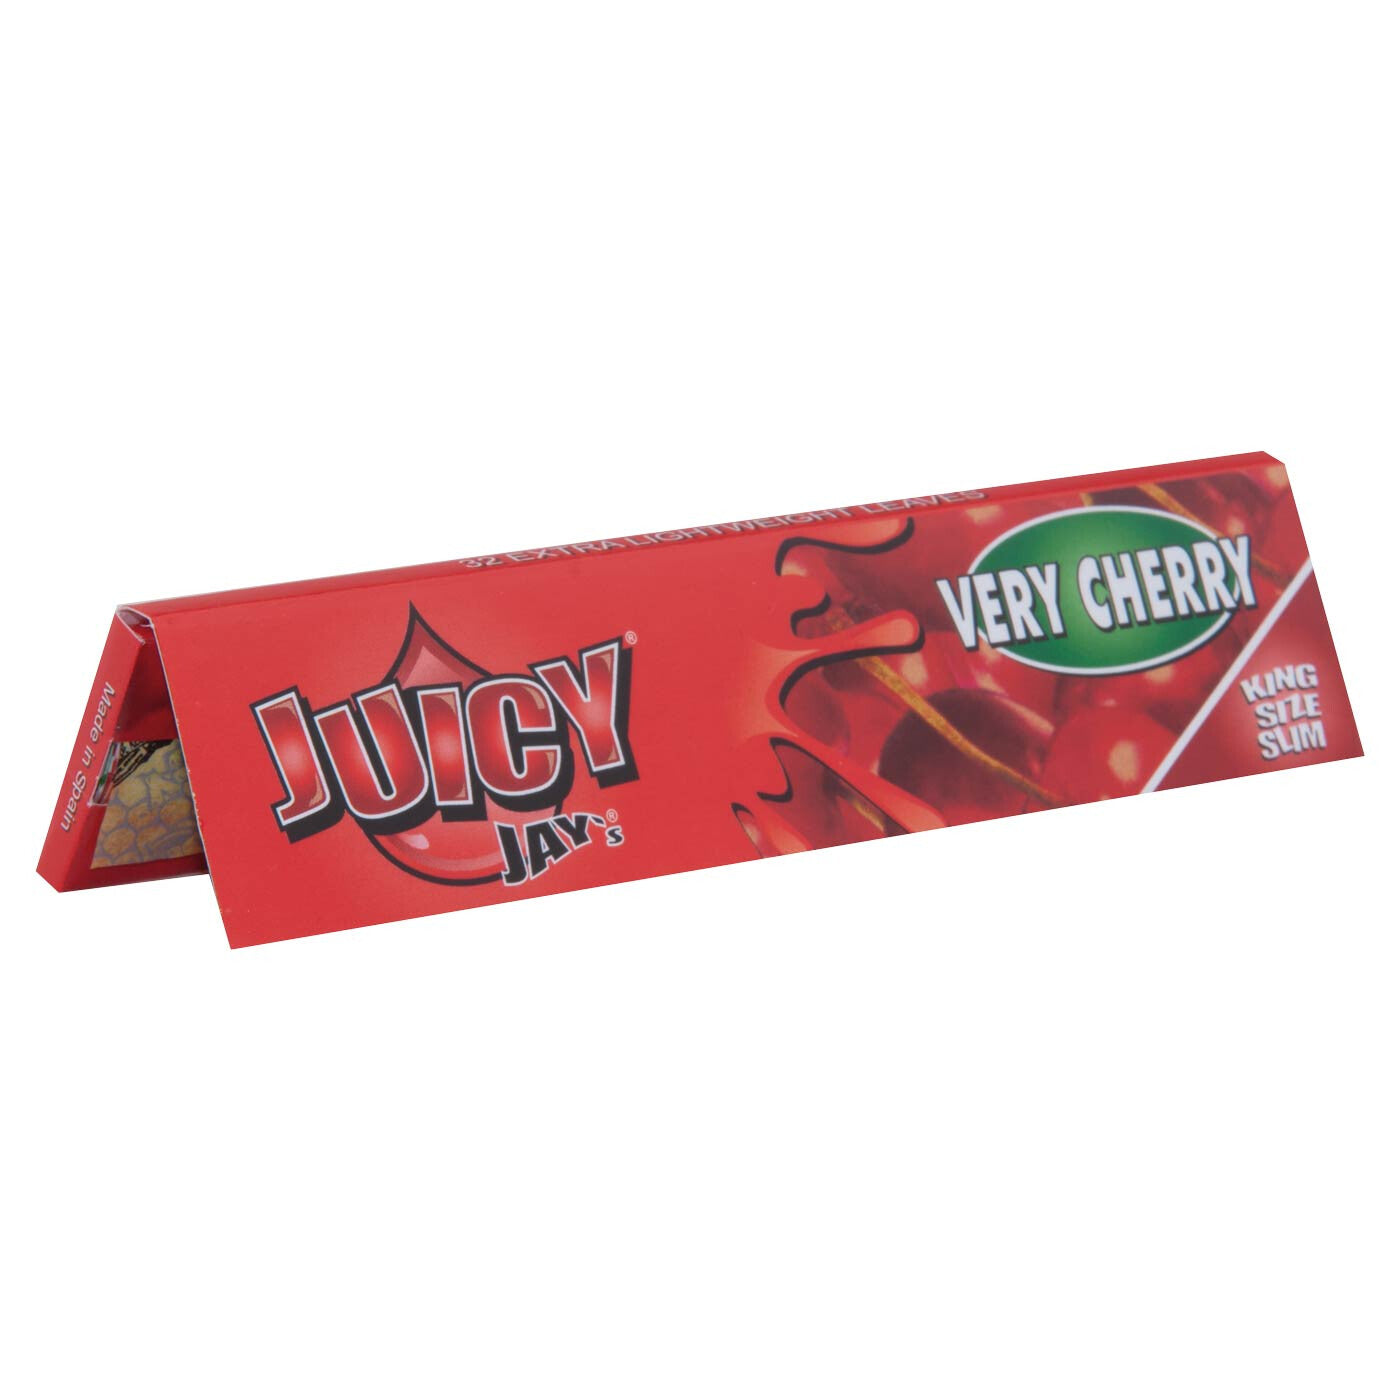 Juicy Jays Very Cherry Kss 1 PC zijkant